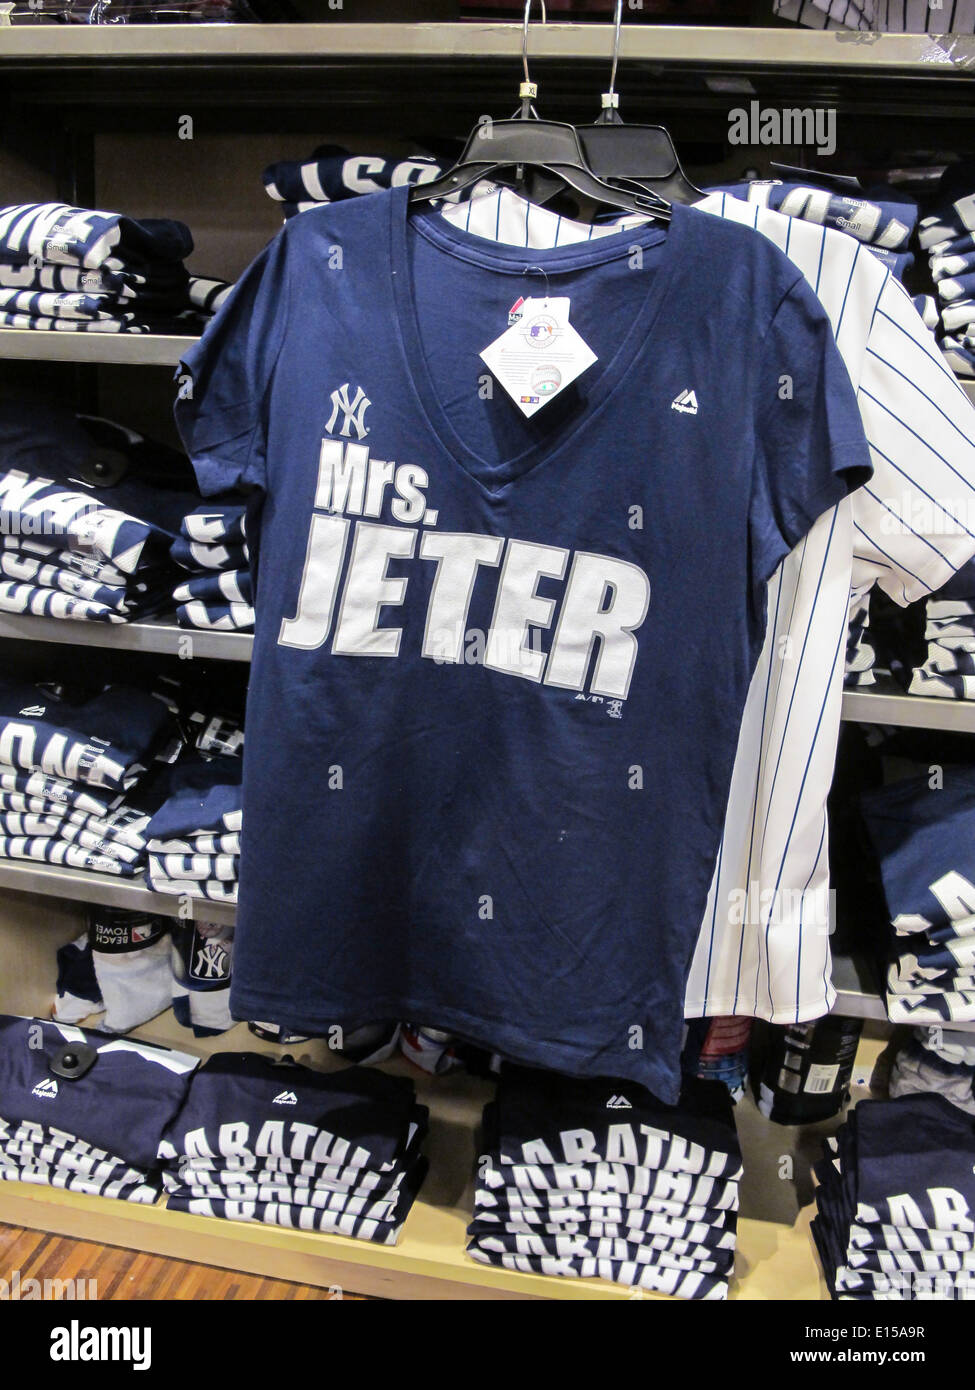 New York Yankees' Jerseys, Modell's Sporting Goods Store Interior